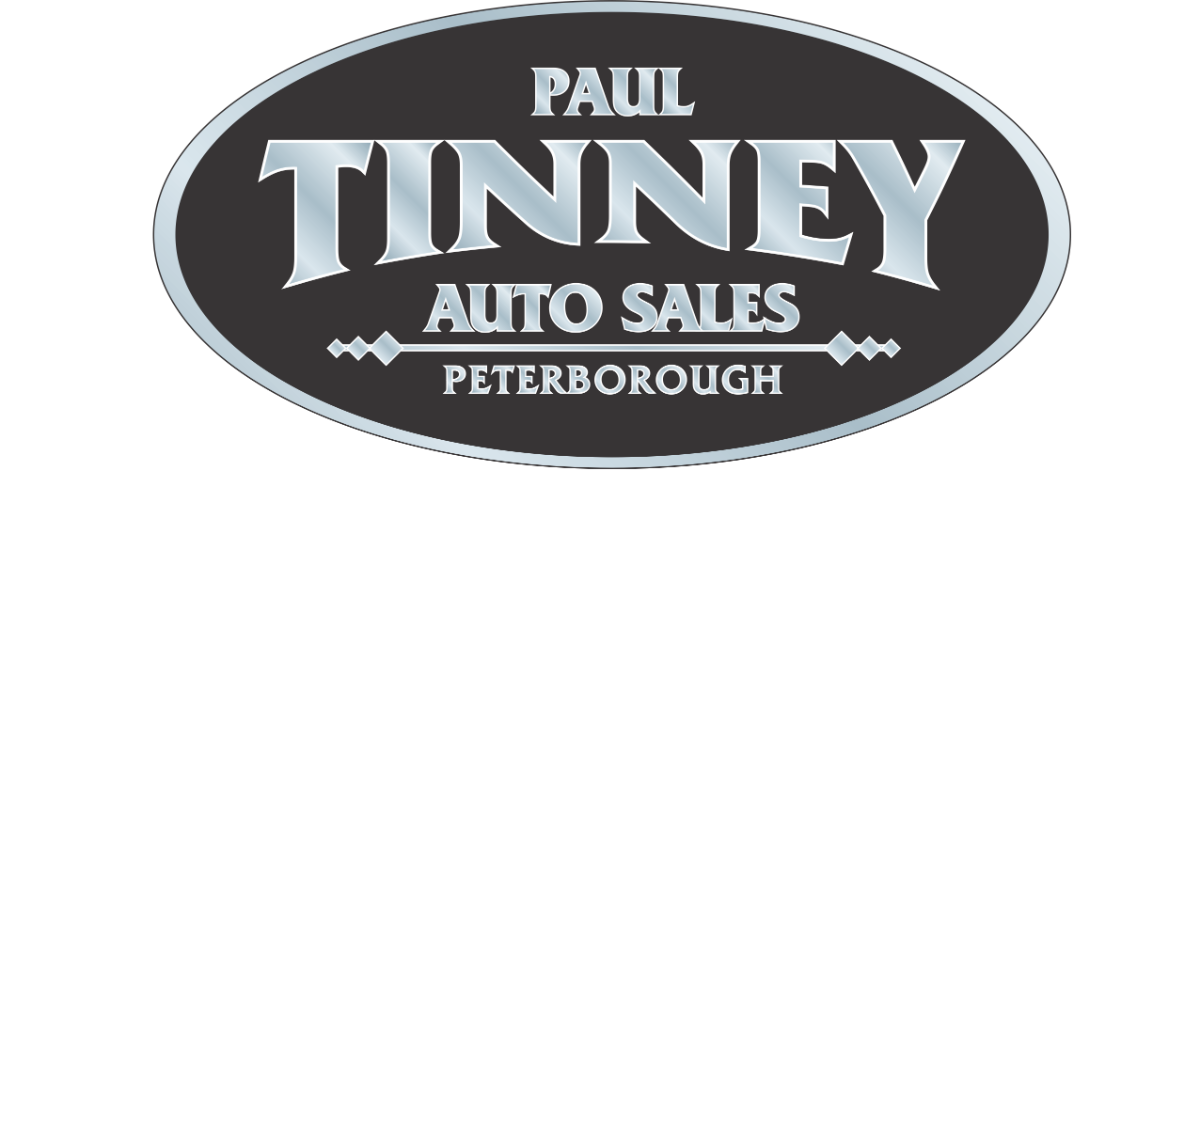 Paul_Tinney_Auto_Sales.png